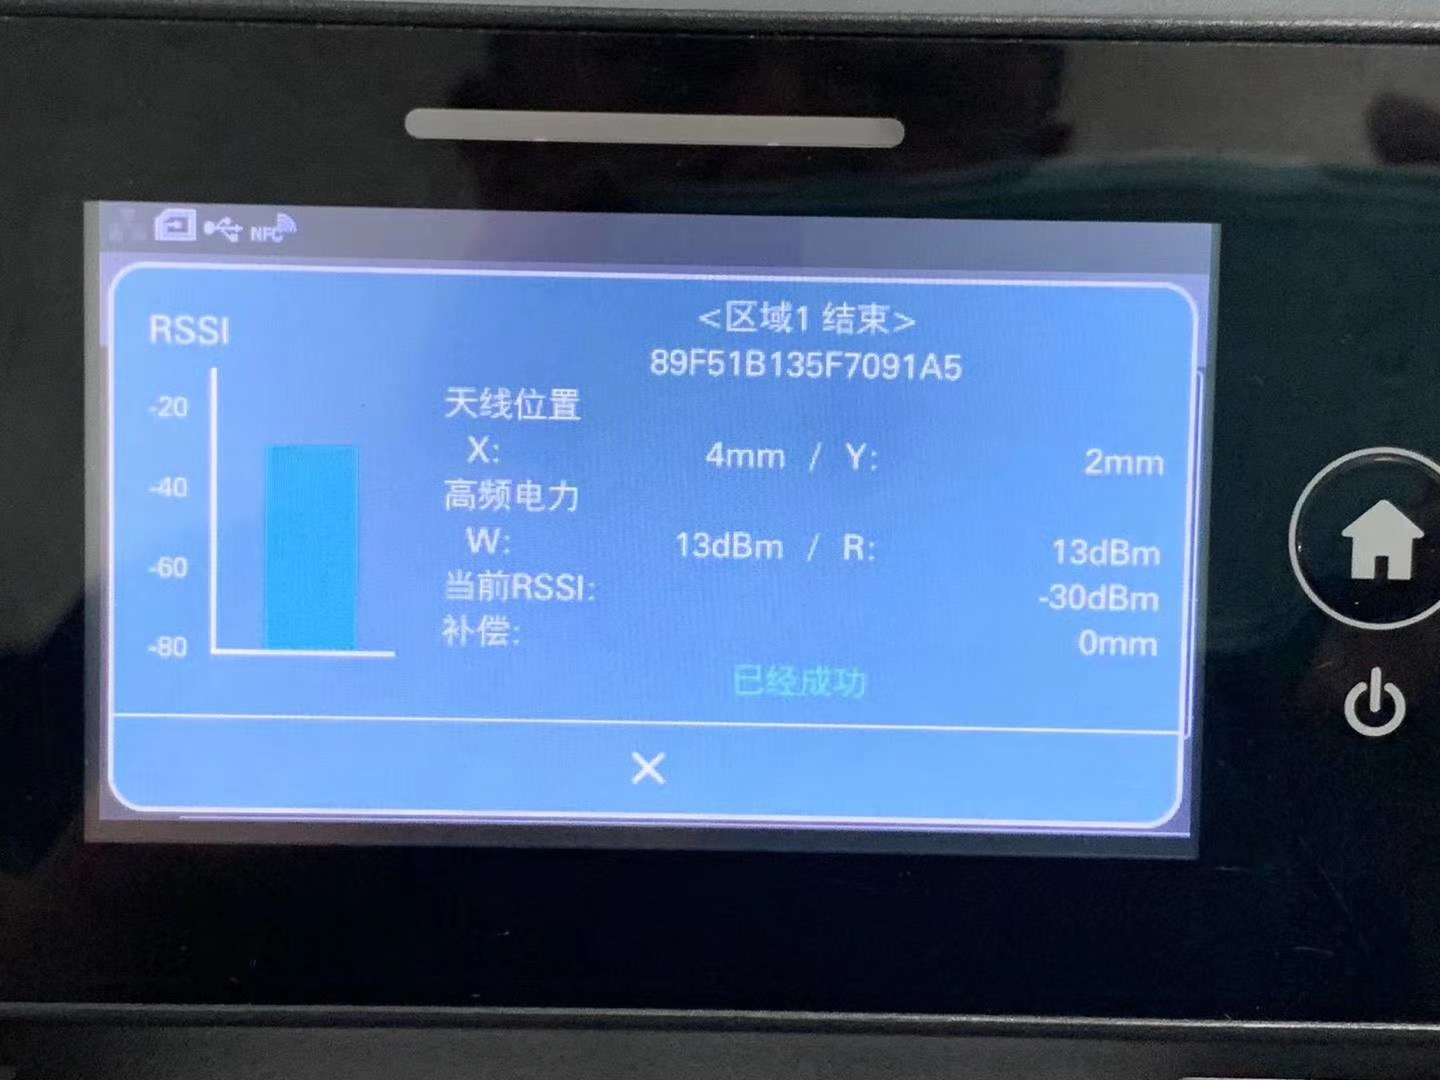 佐藤SATO CT4-LX RFID AEP云打印机图片